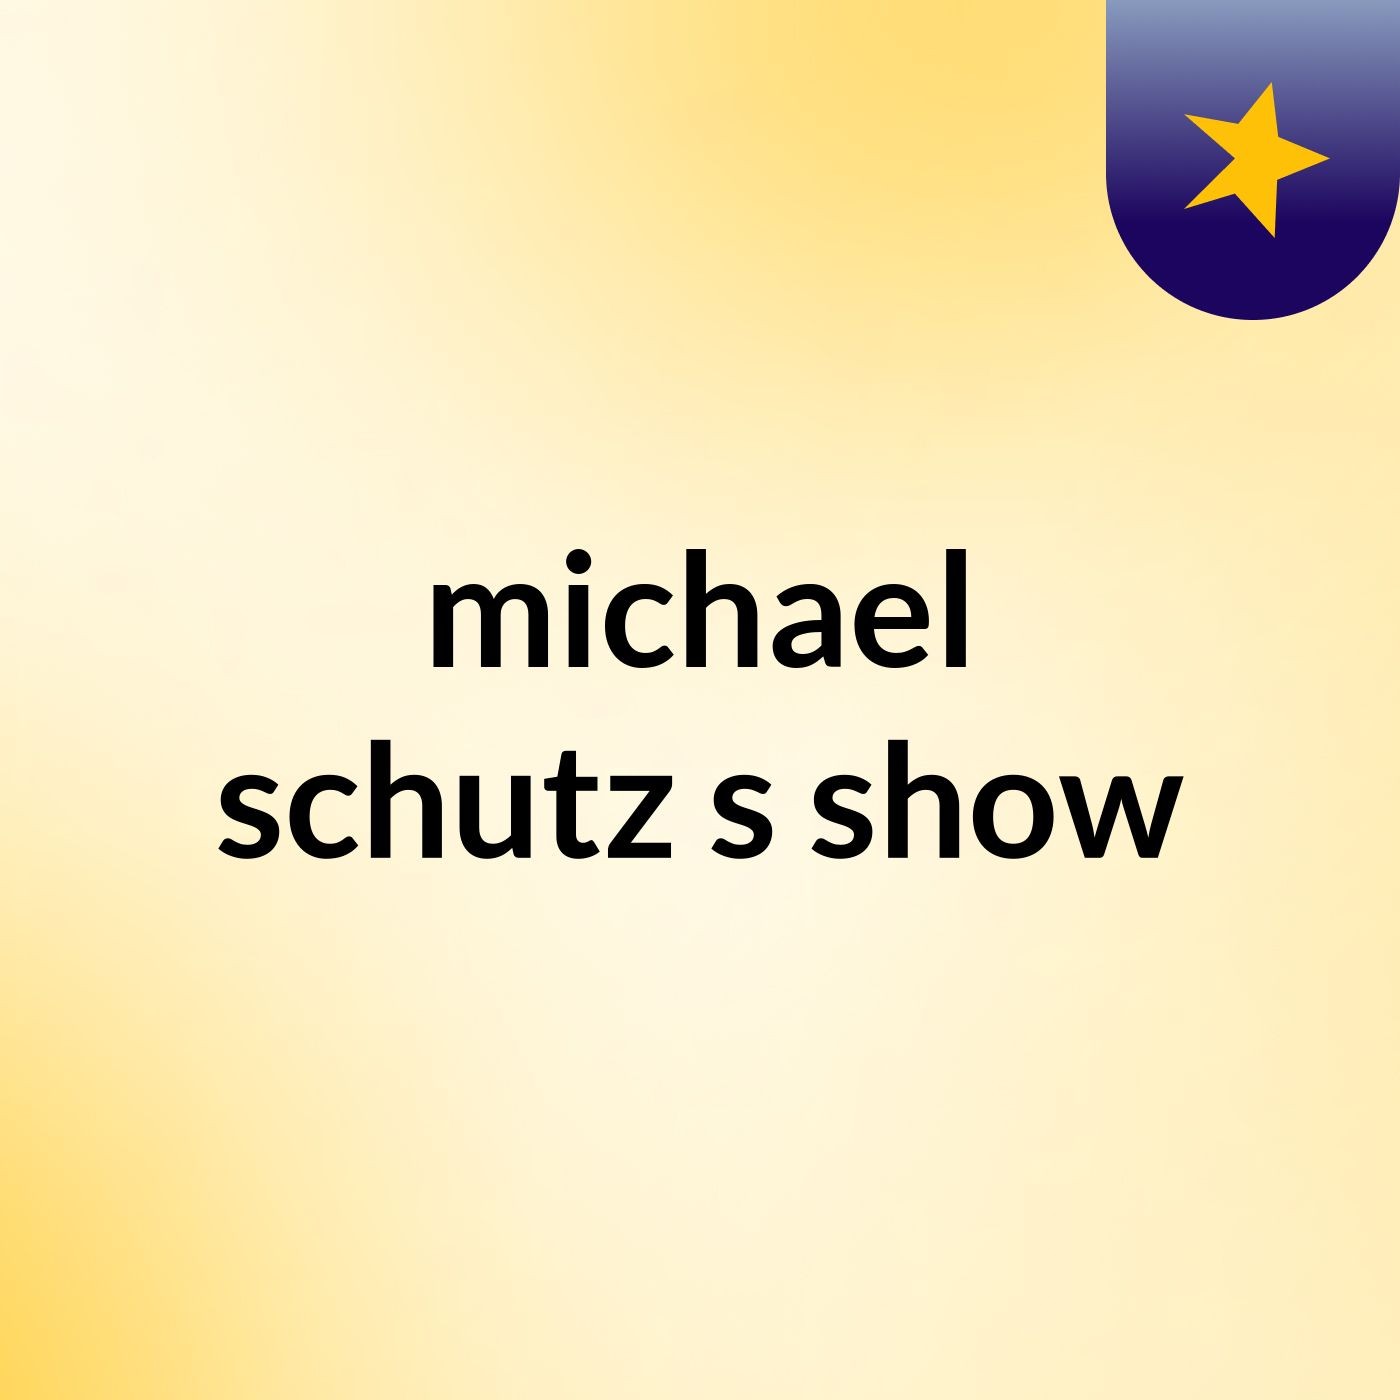 Episode 3 - michael schutz's show